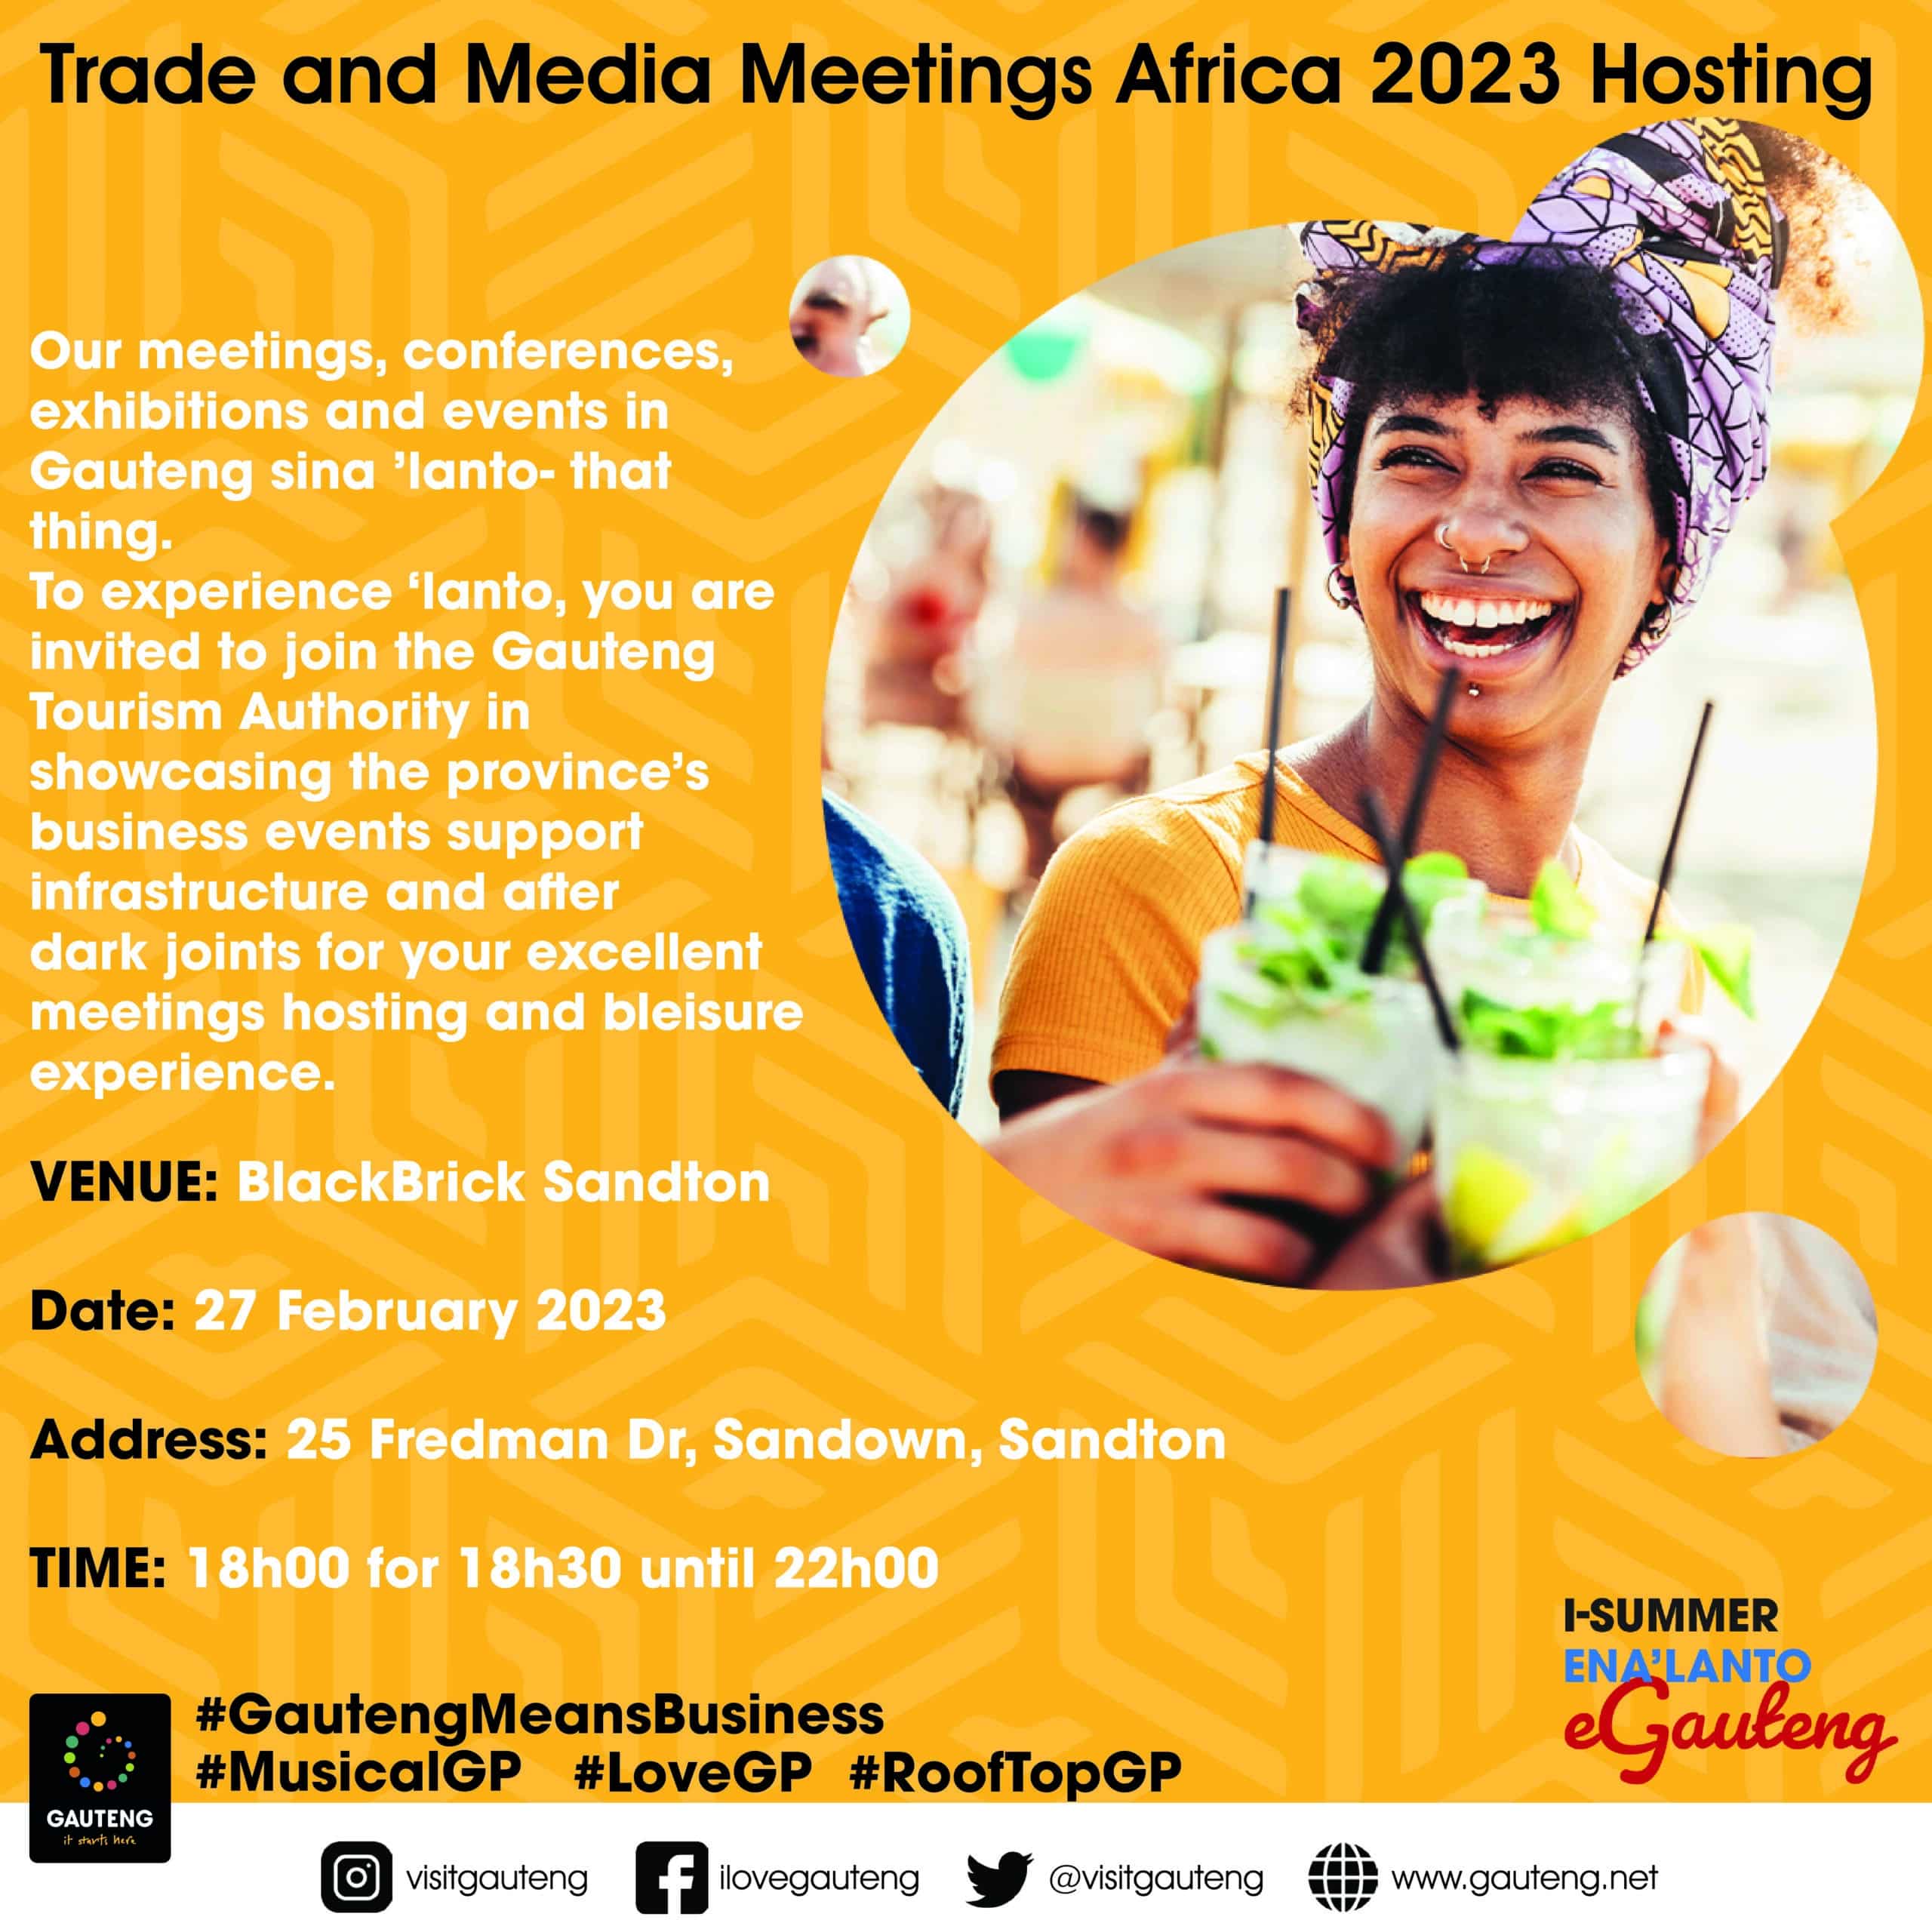 Trade and Media Meetings Africa 2023 Hosting